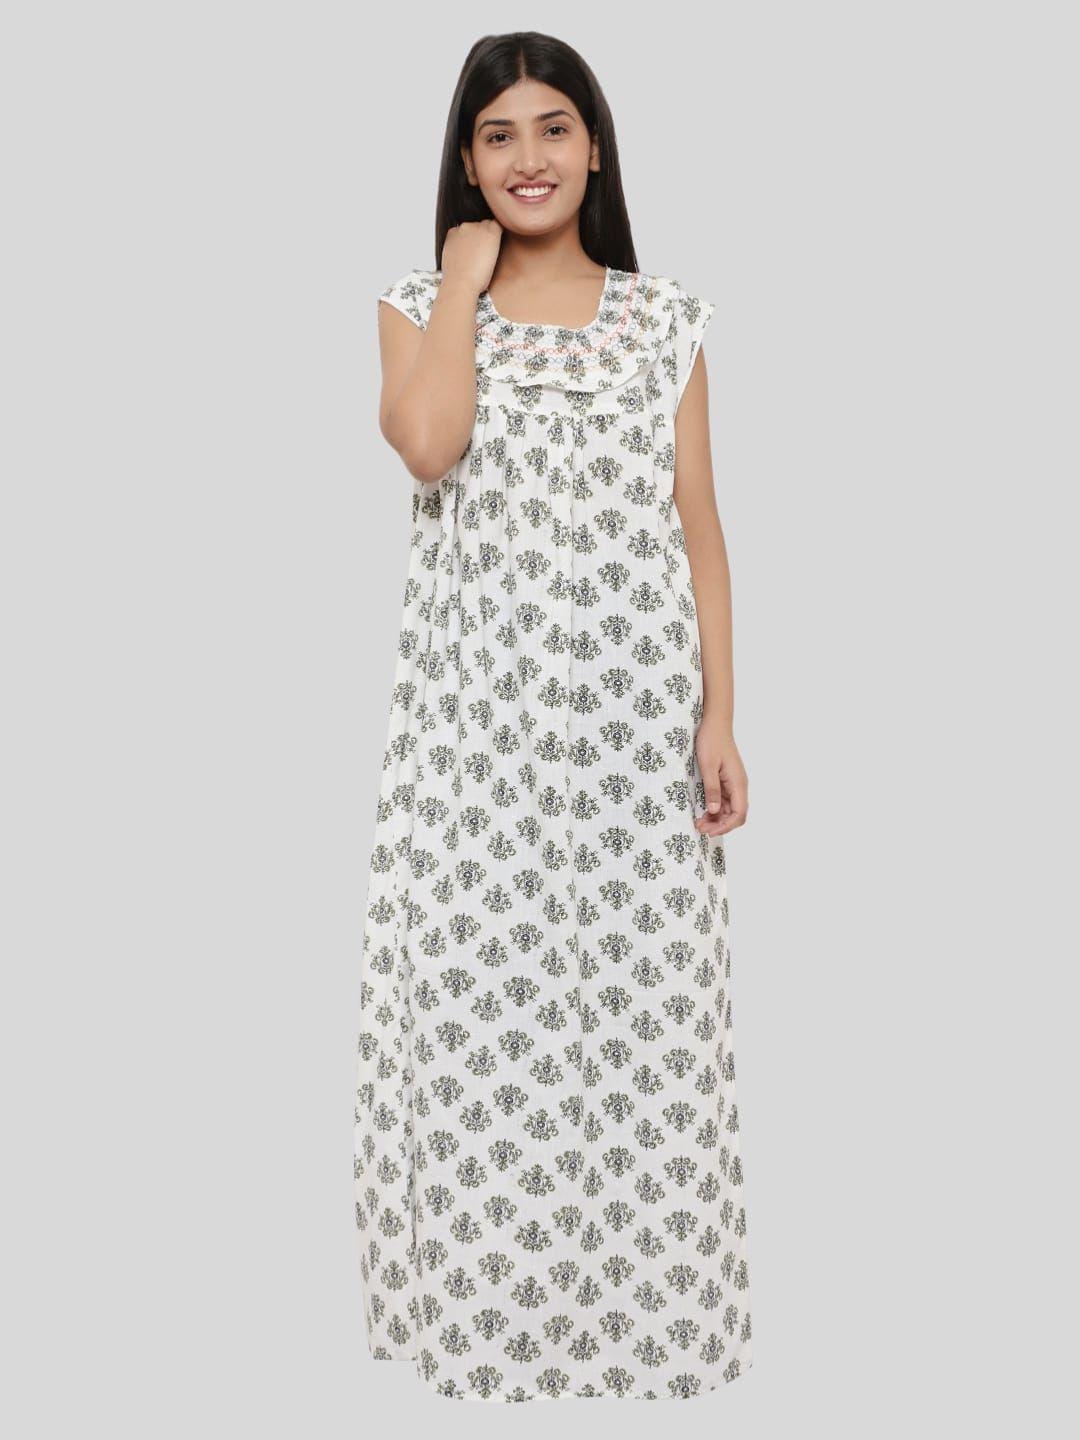 palival ethnic motifs printed pure cotton maxi nightdress